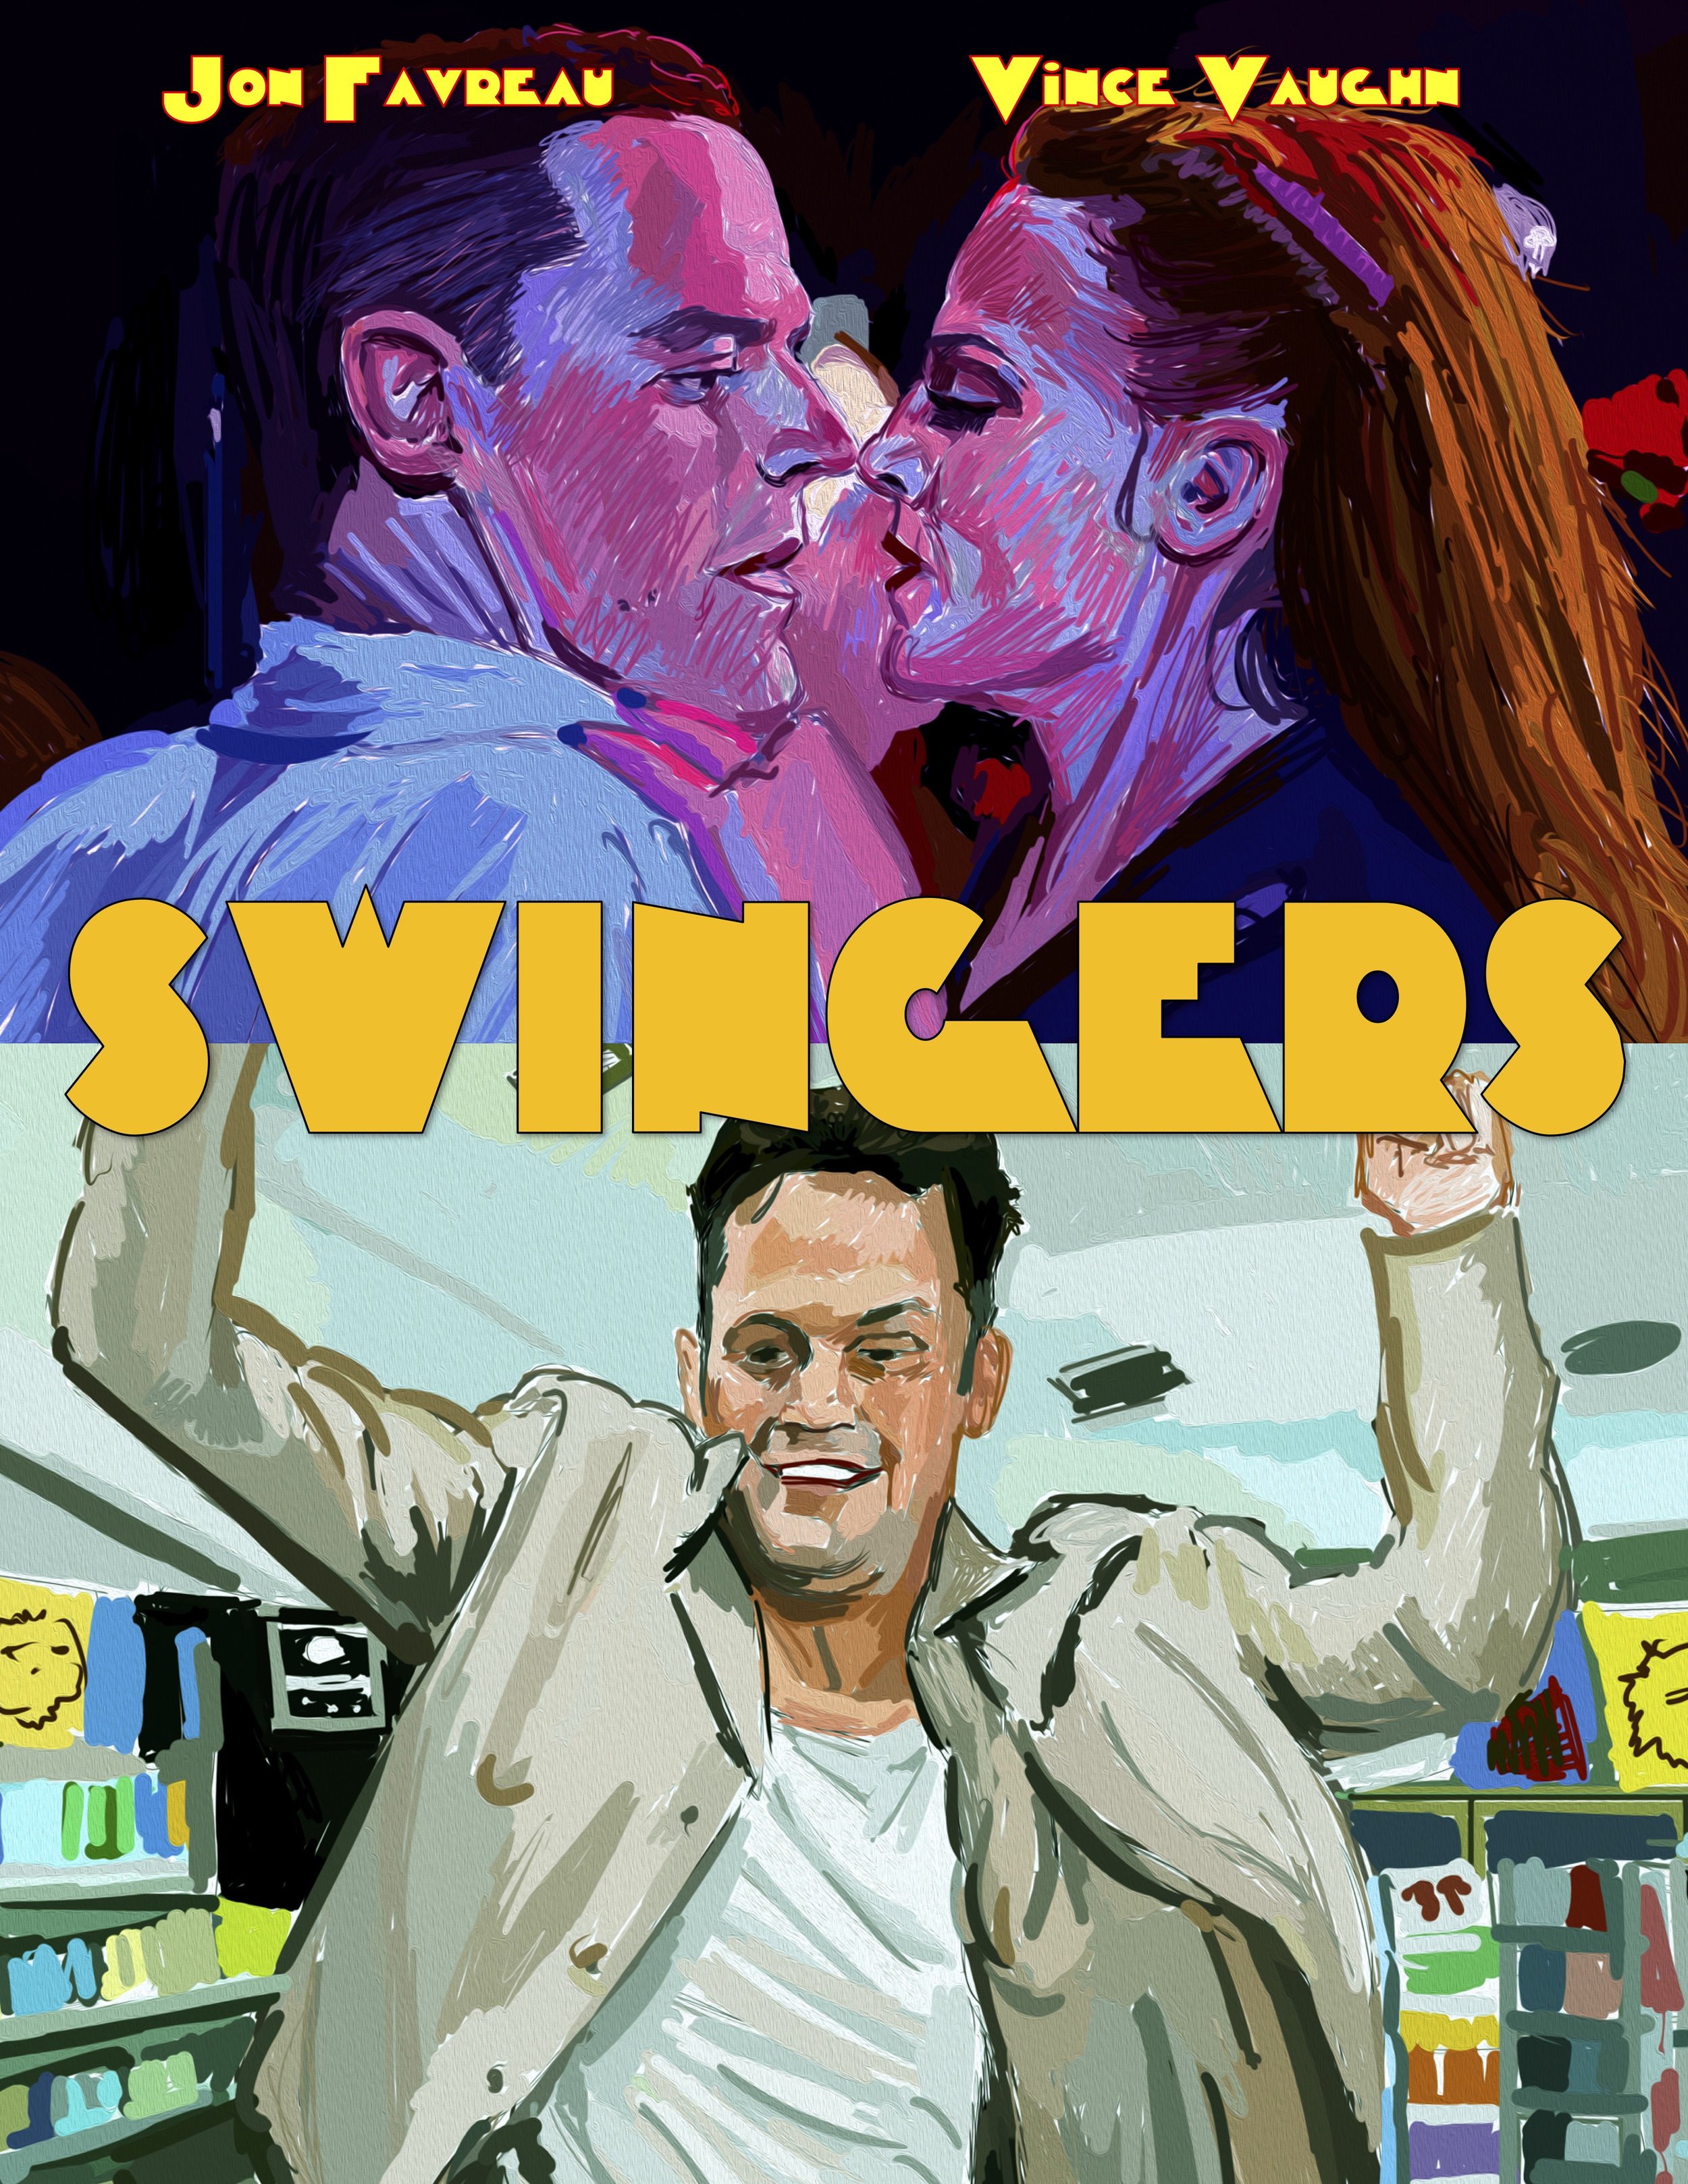 Swingers (1996)